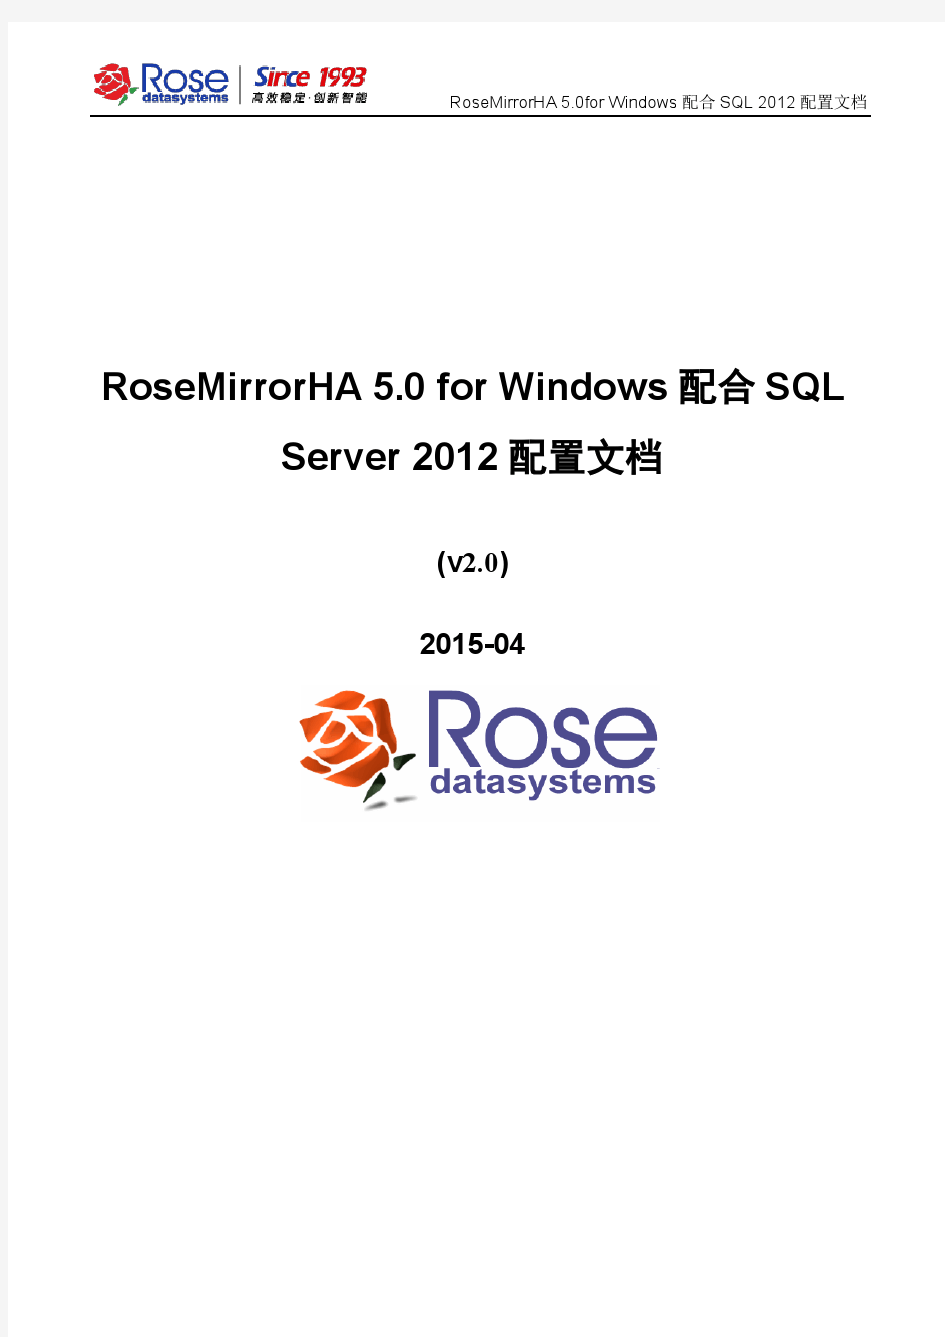 RoseMirrorHA 5.0 for Windows配合SQL SERVER 2012配置文档_v2.0-2015-4-29